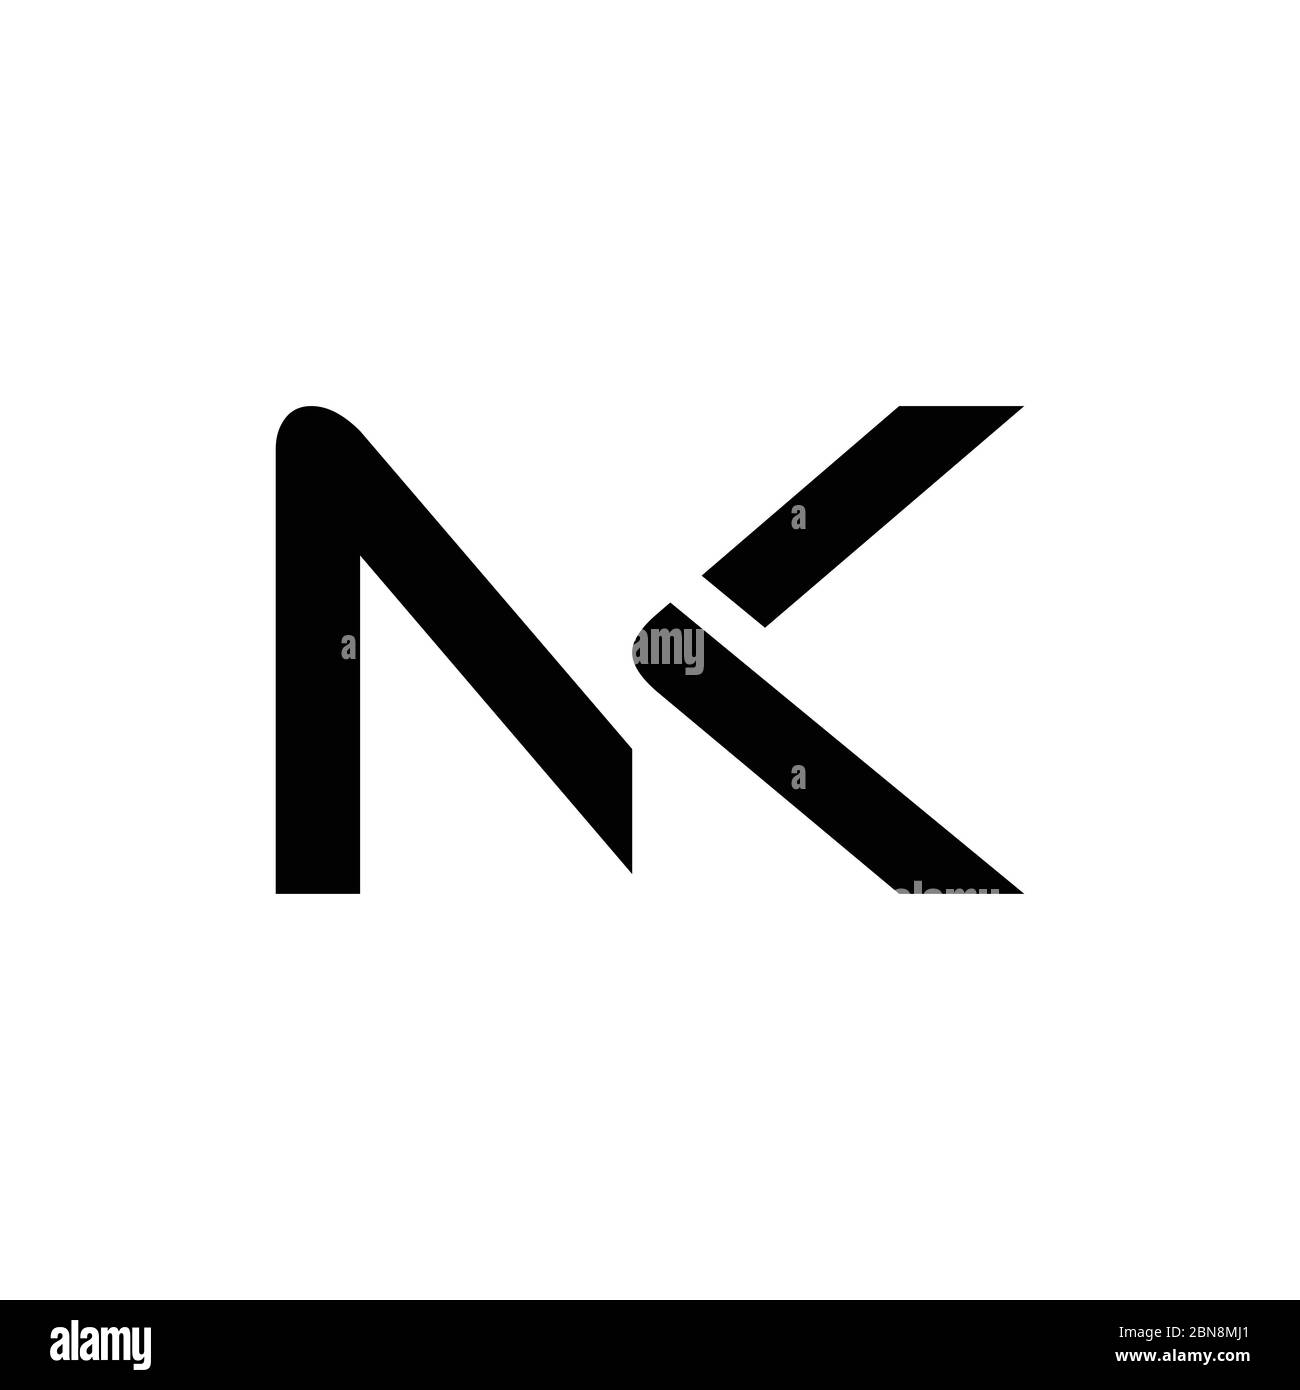 Nk logo Stock-Vektorgrafiken kaufen - Alamy